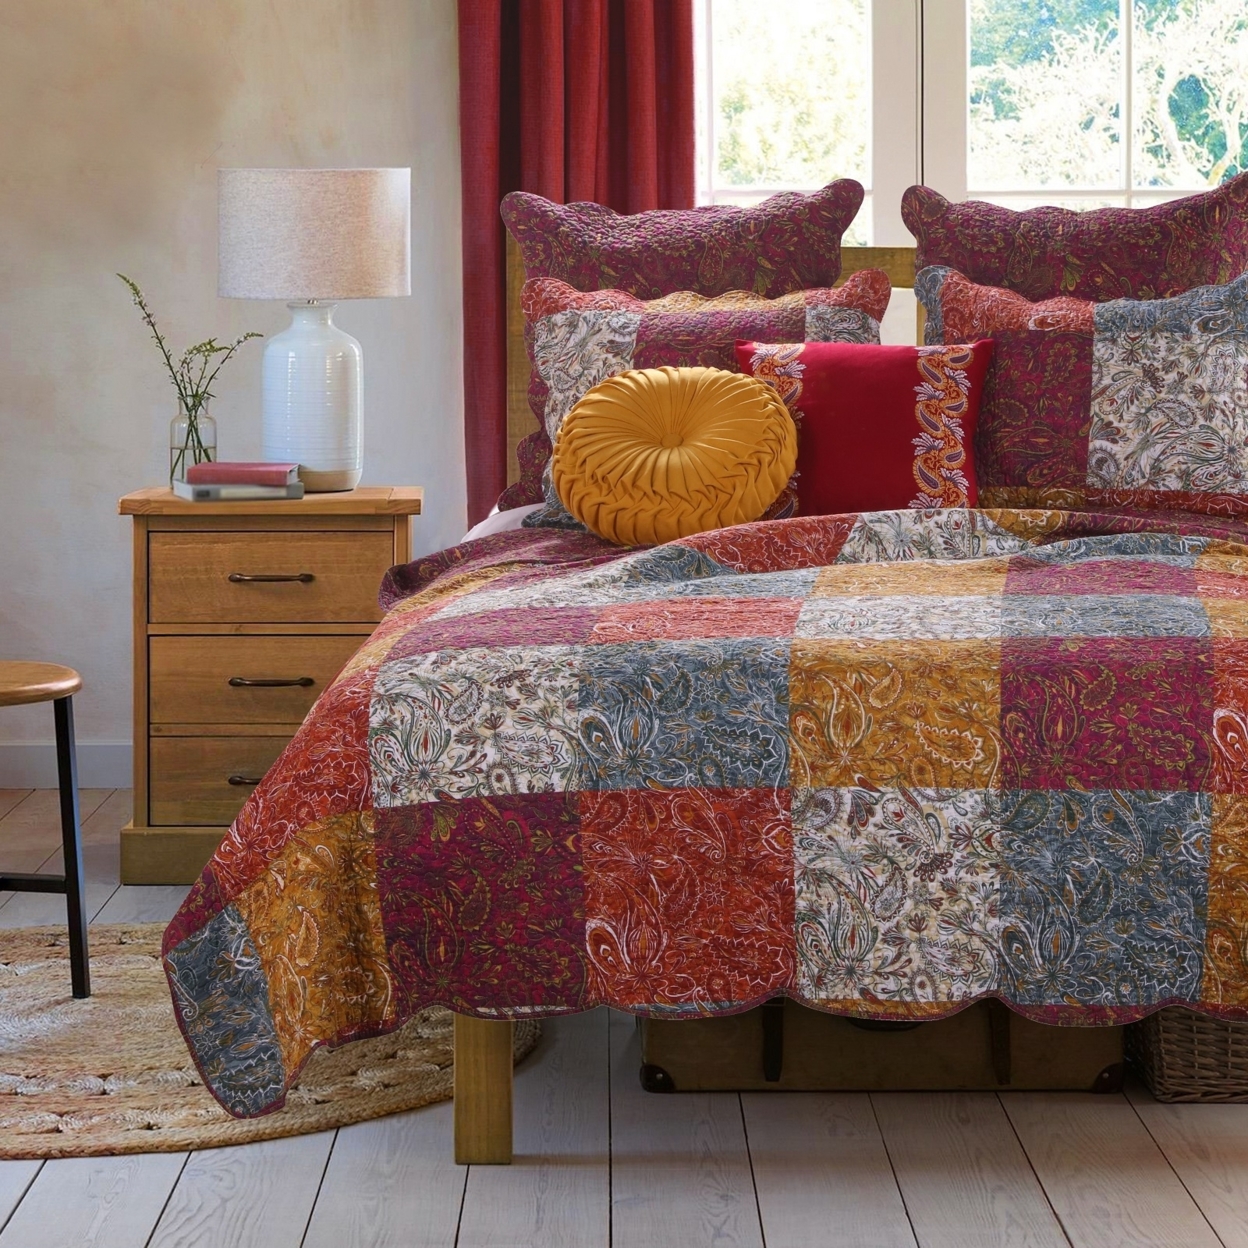 3 Piece Cotton King Size Quilt Set With Paisley Print, Multicolor- Saltoro Sherpi